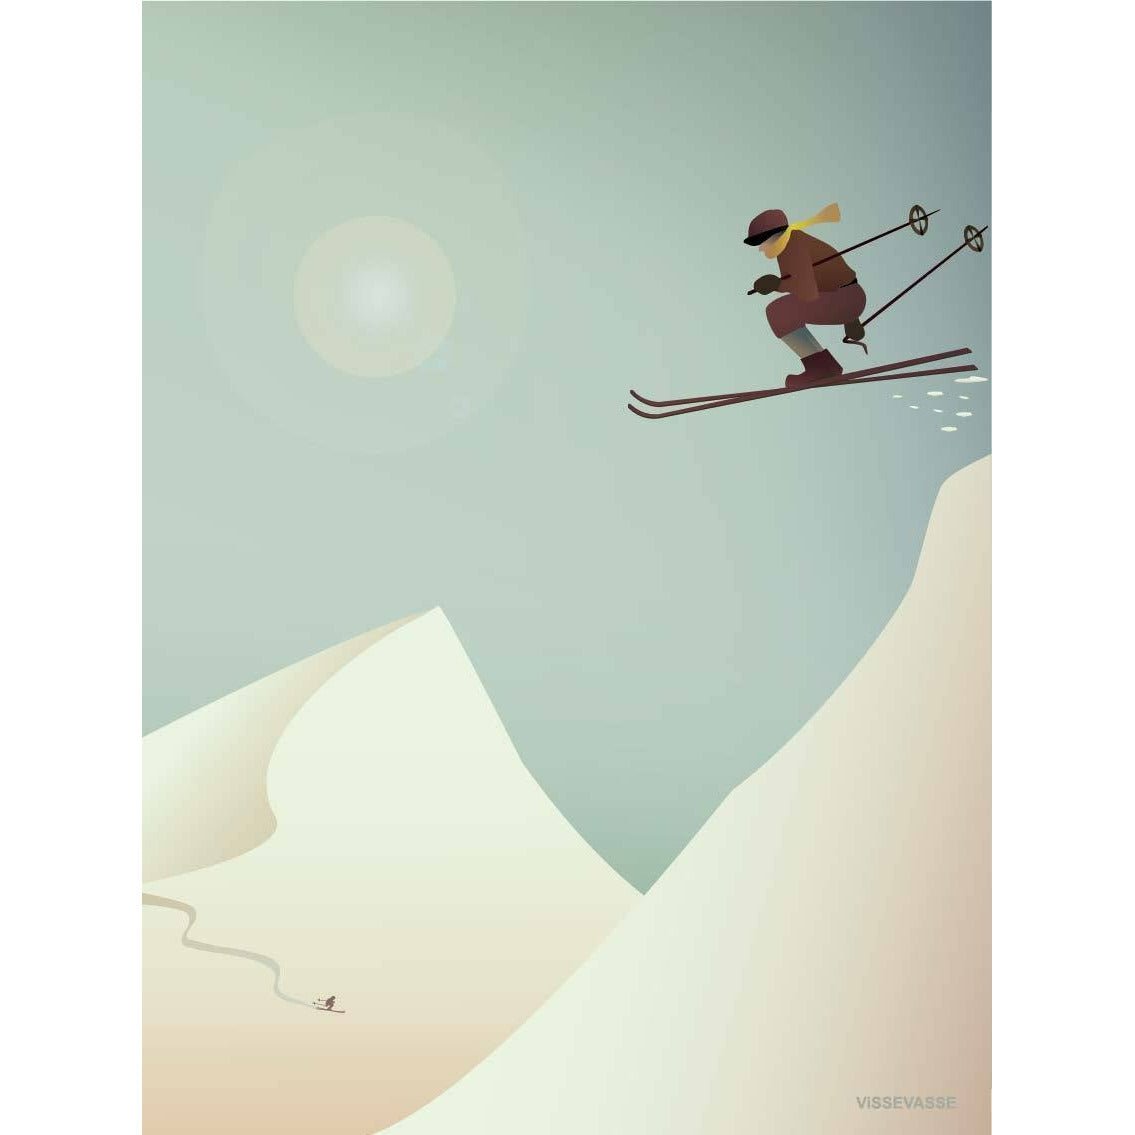 Vissevasse ski plakat, 30 x40 cm